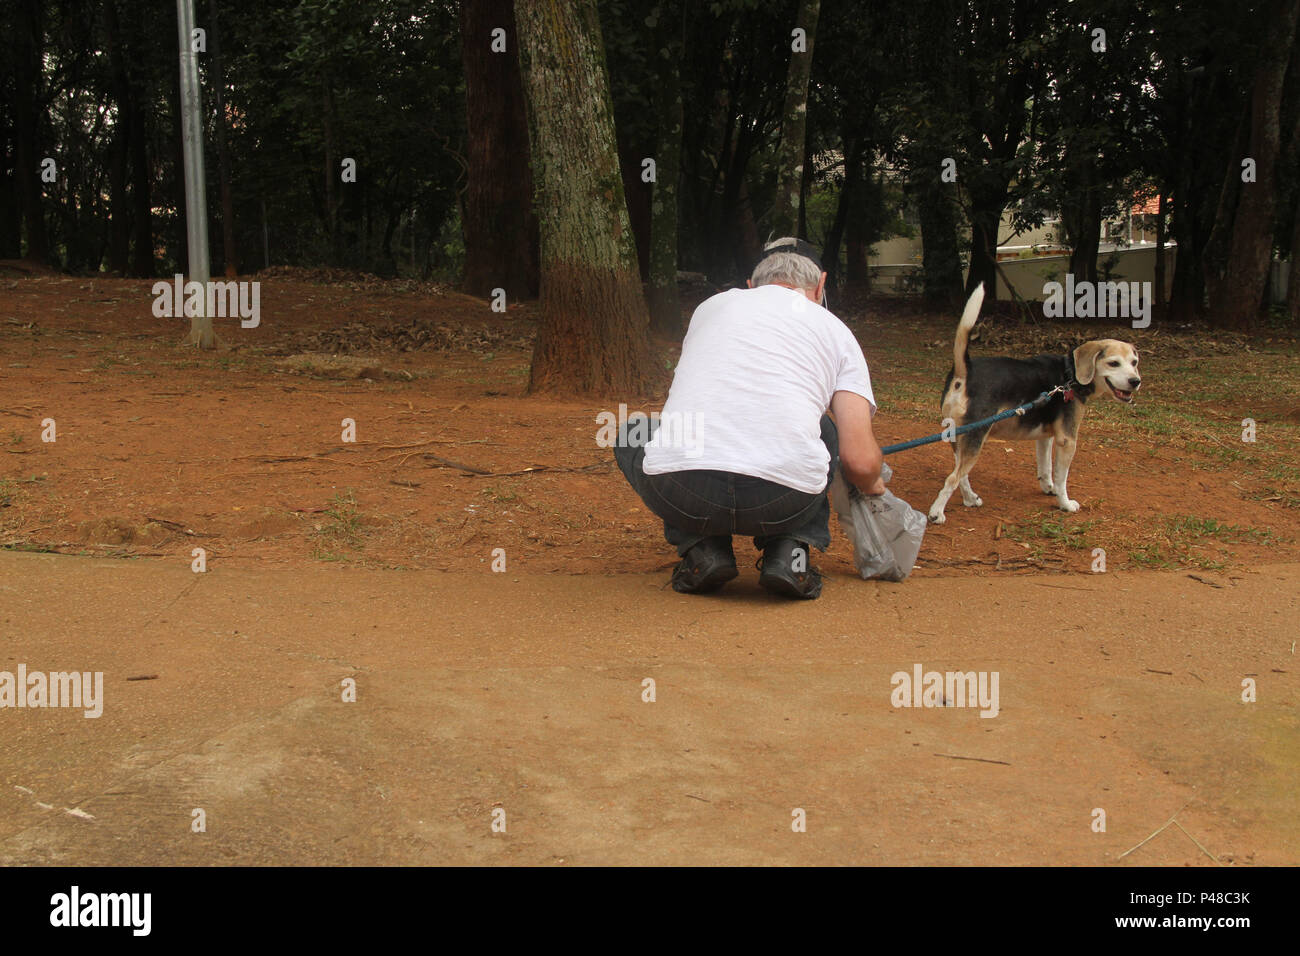 SÃO PAULO, SP - 10.04.2015: ADULTO RECOLHENDO FEZES DE CACHORRO - Adulto recolhendo fezes de cachorro em praça pública na Vila Madalena. (Foto: Celio Coscia / Fotoarena) Foto Stock